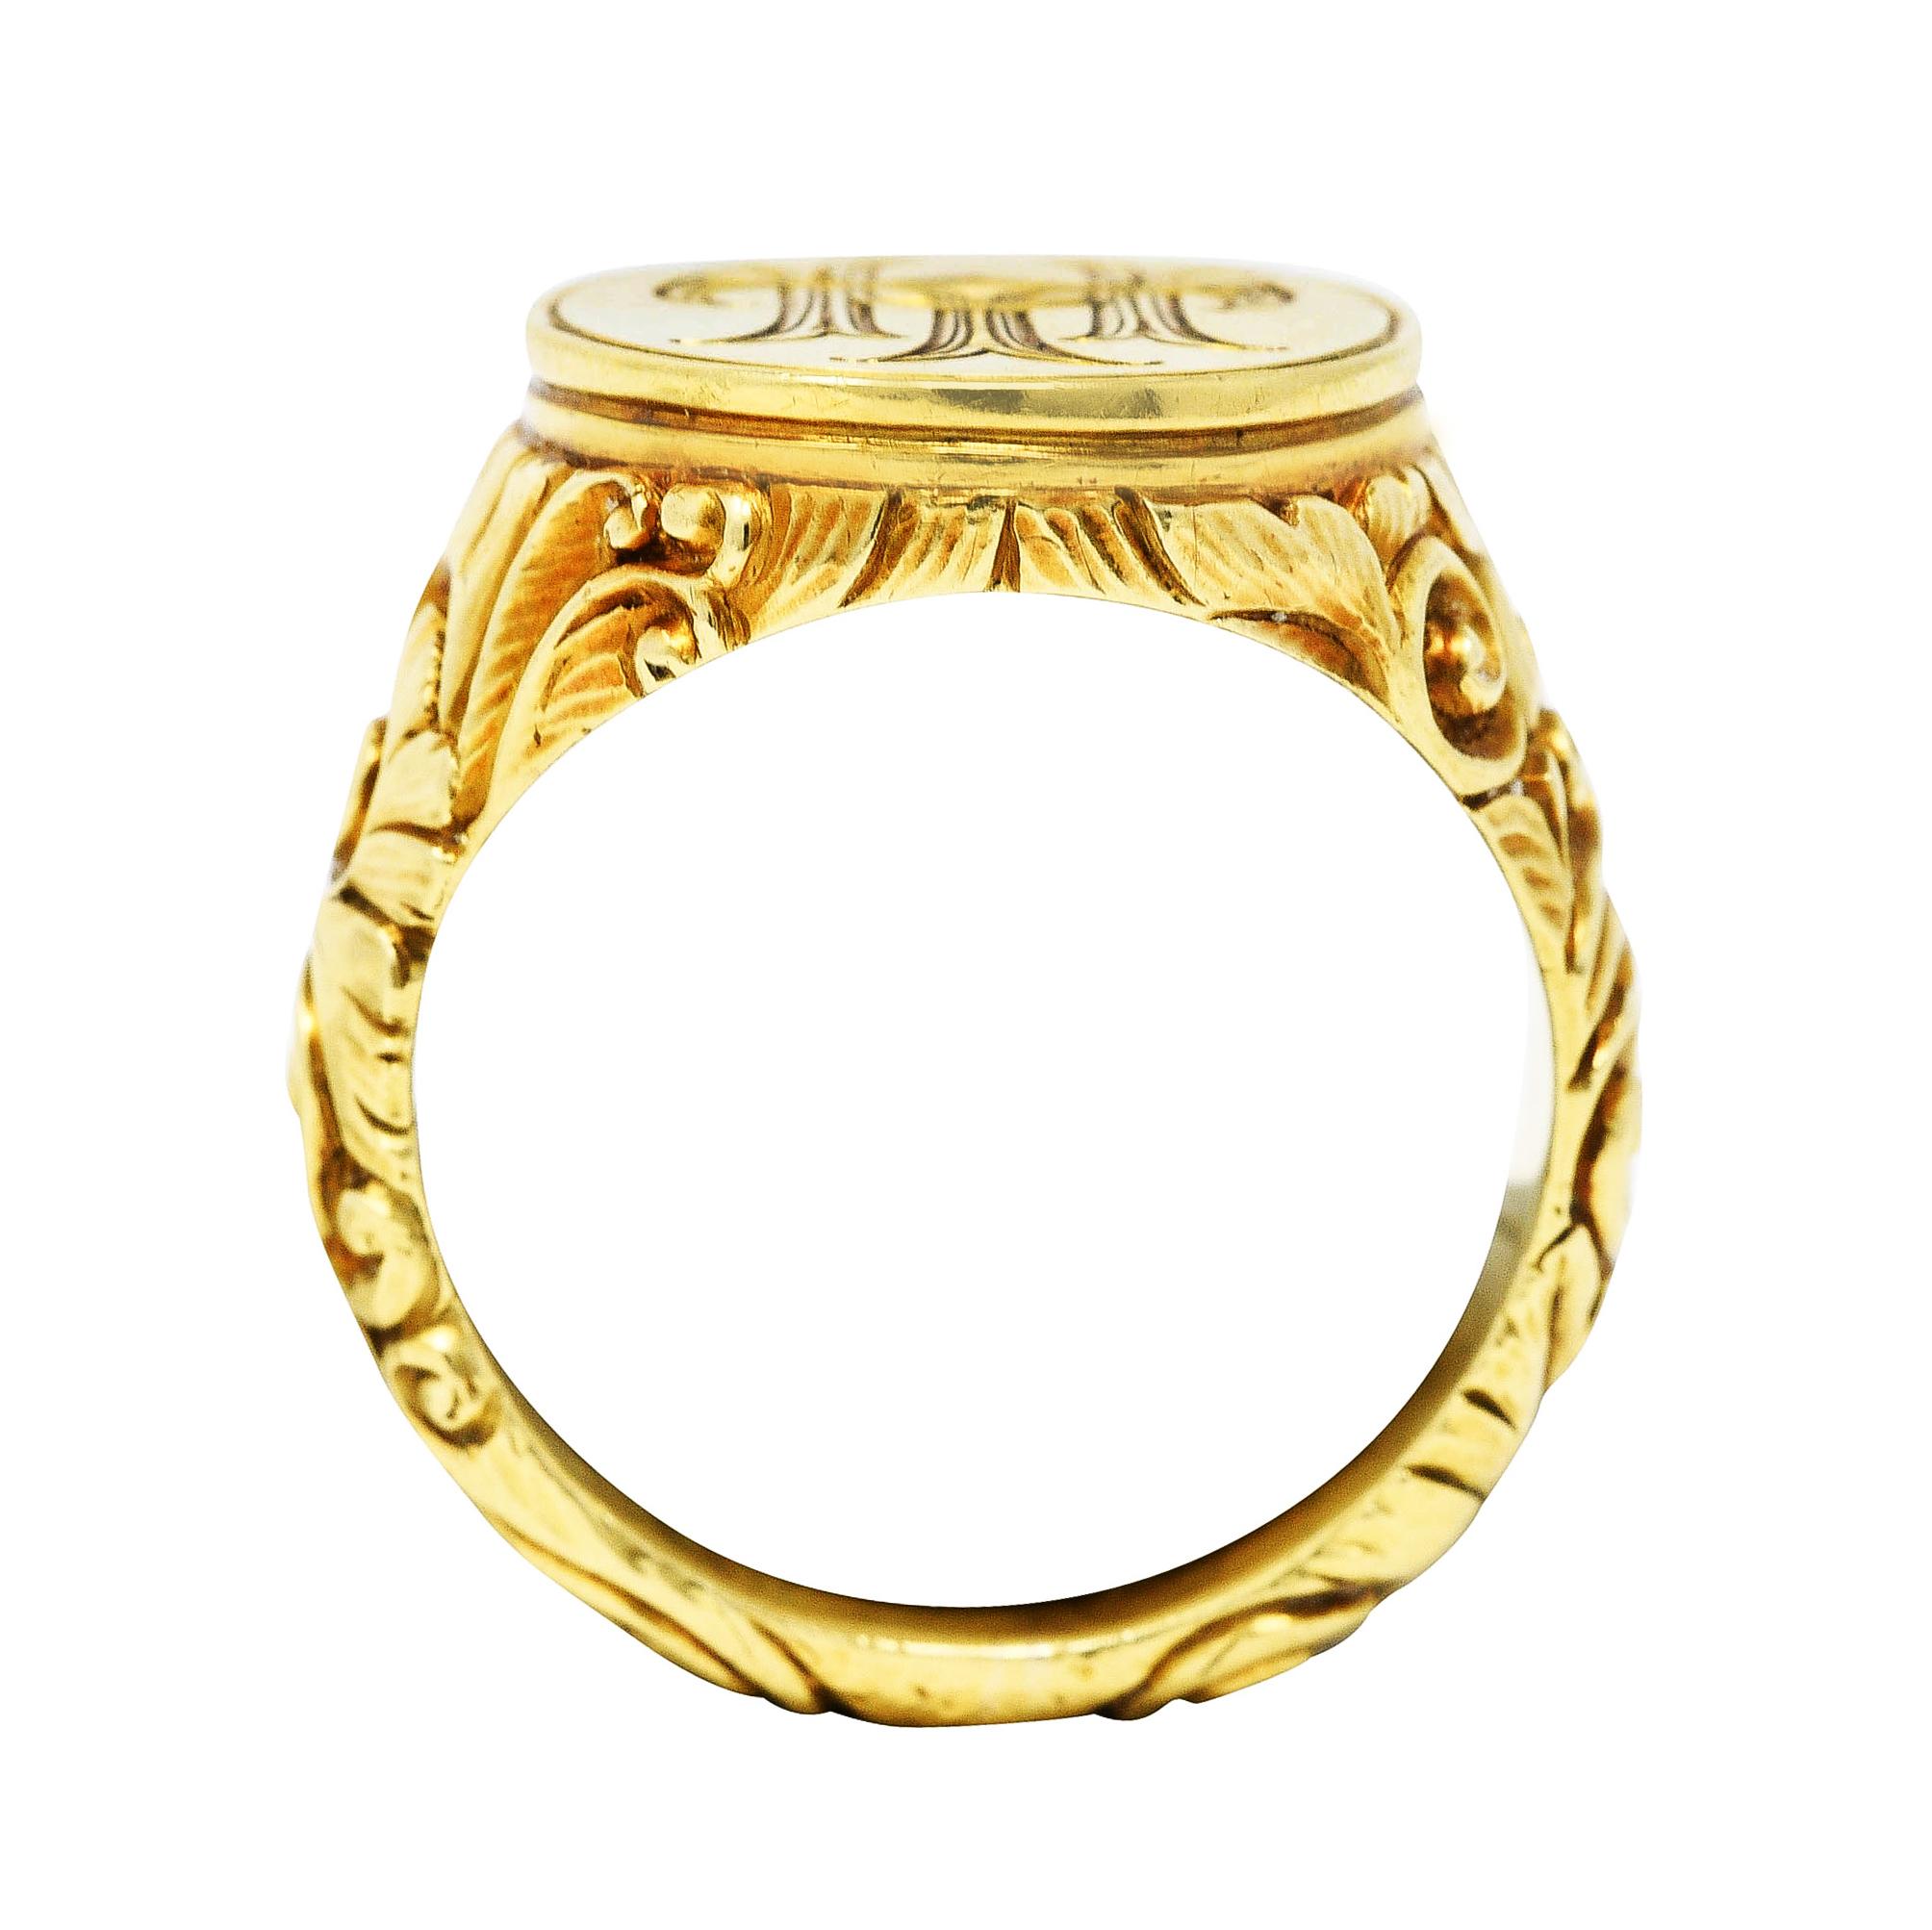 Scofield & Co. Art Nouveau 14 Karat Yellow Gold Scrolling Unisex Signet Ring 1